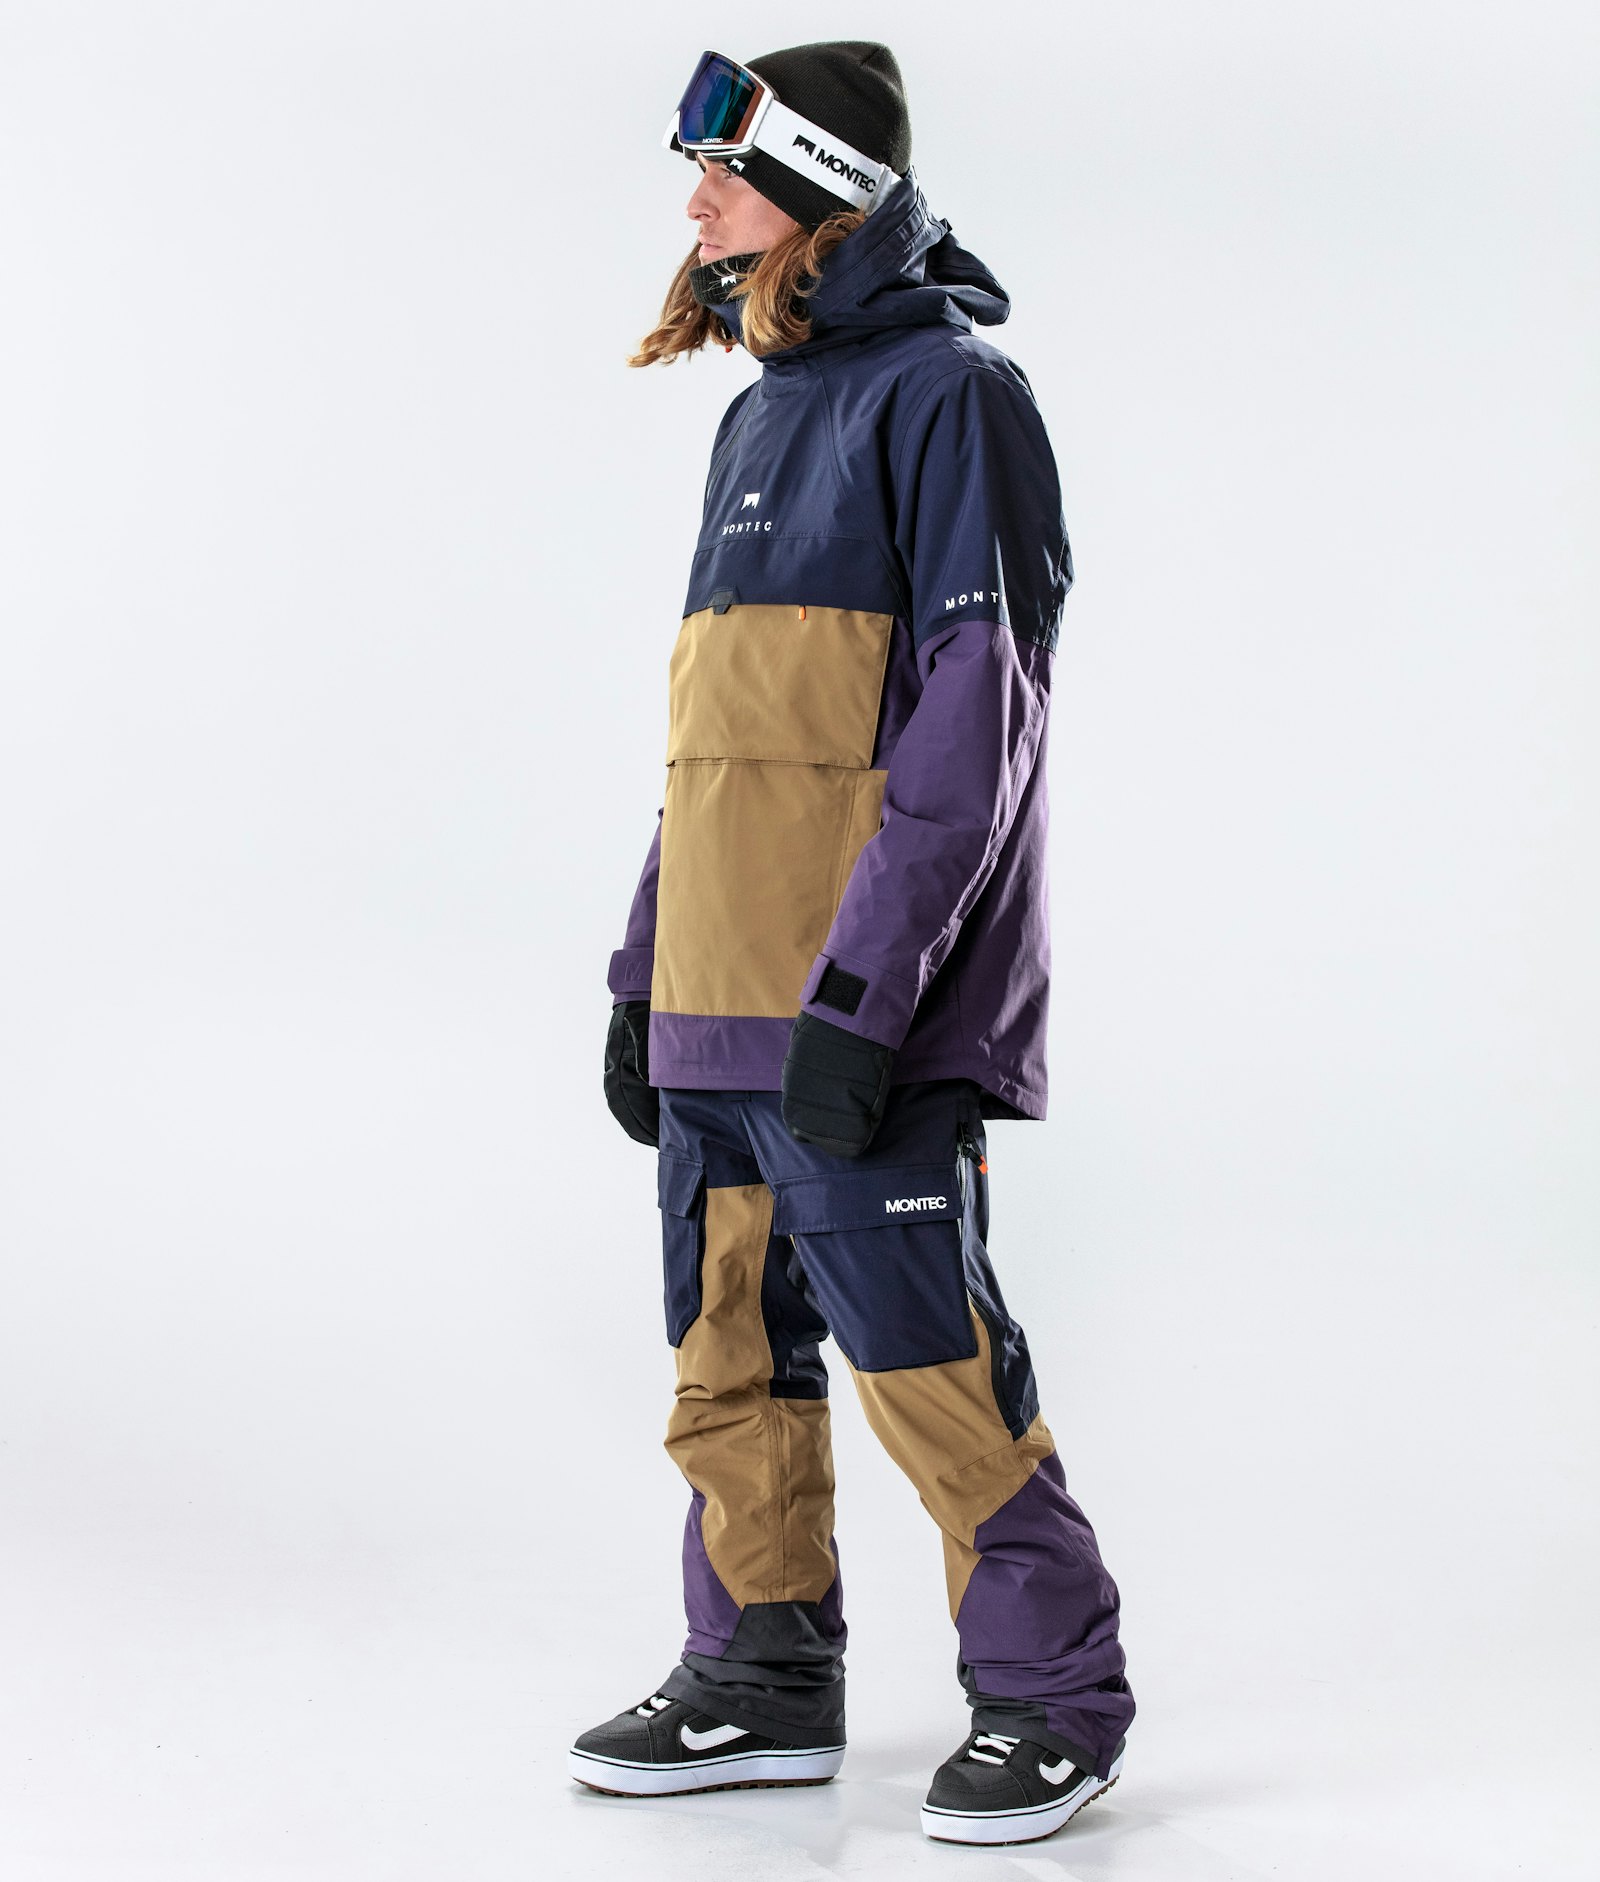 Dune 2020 Snowboardjacke Herren Marine/Gold/Purple